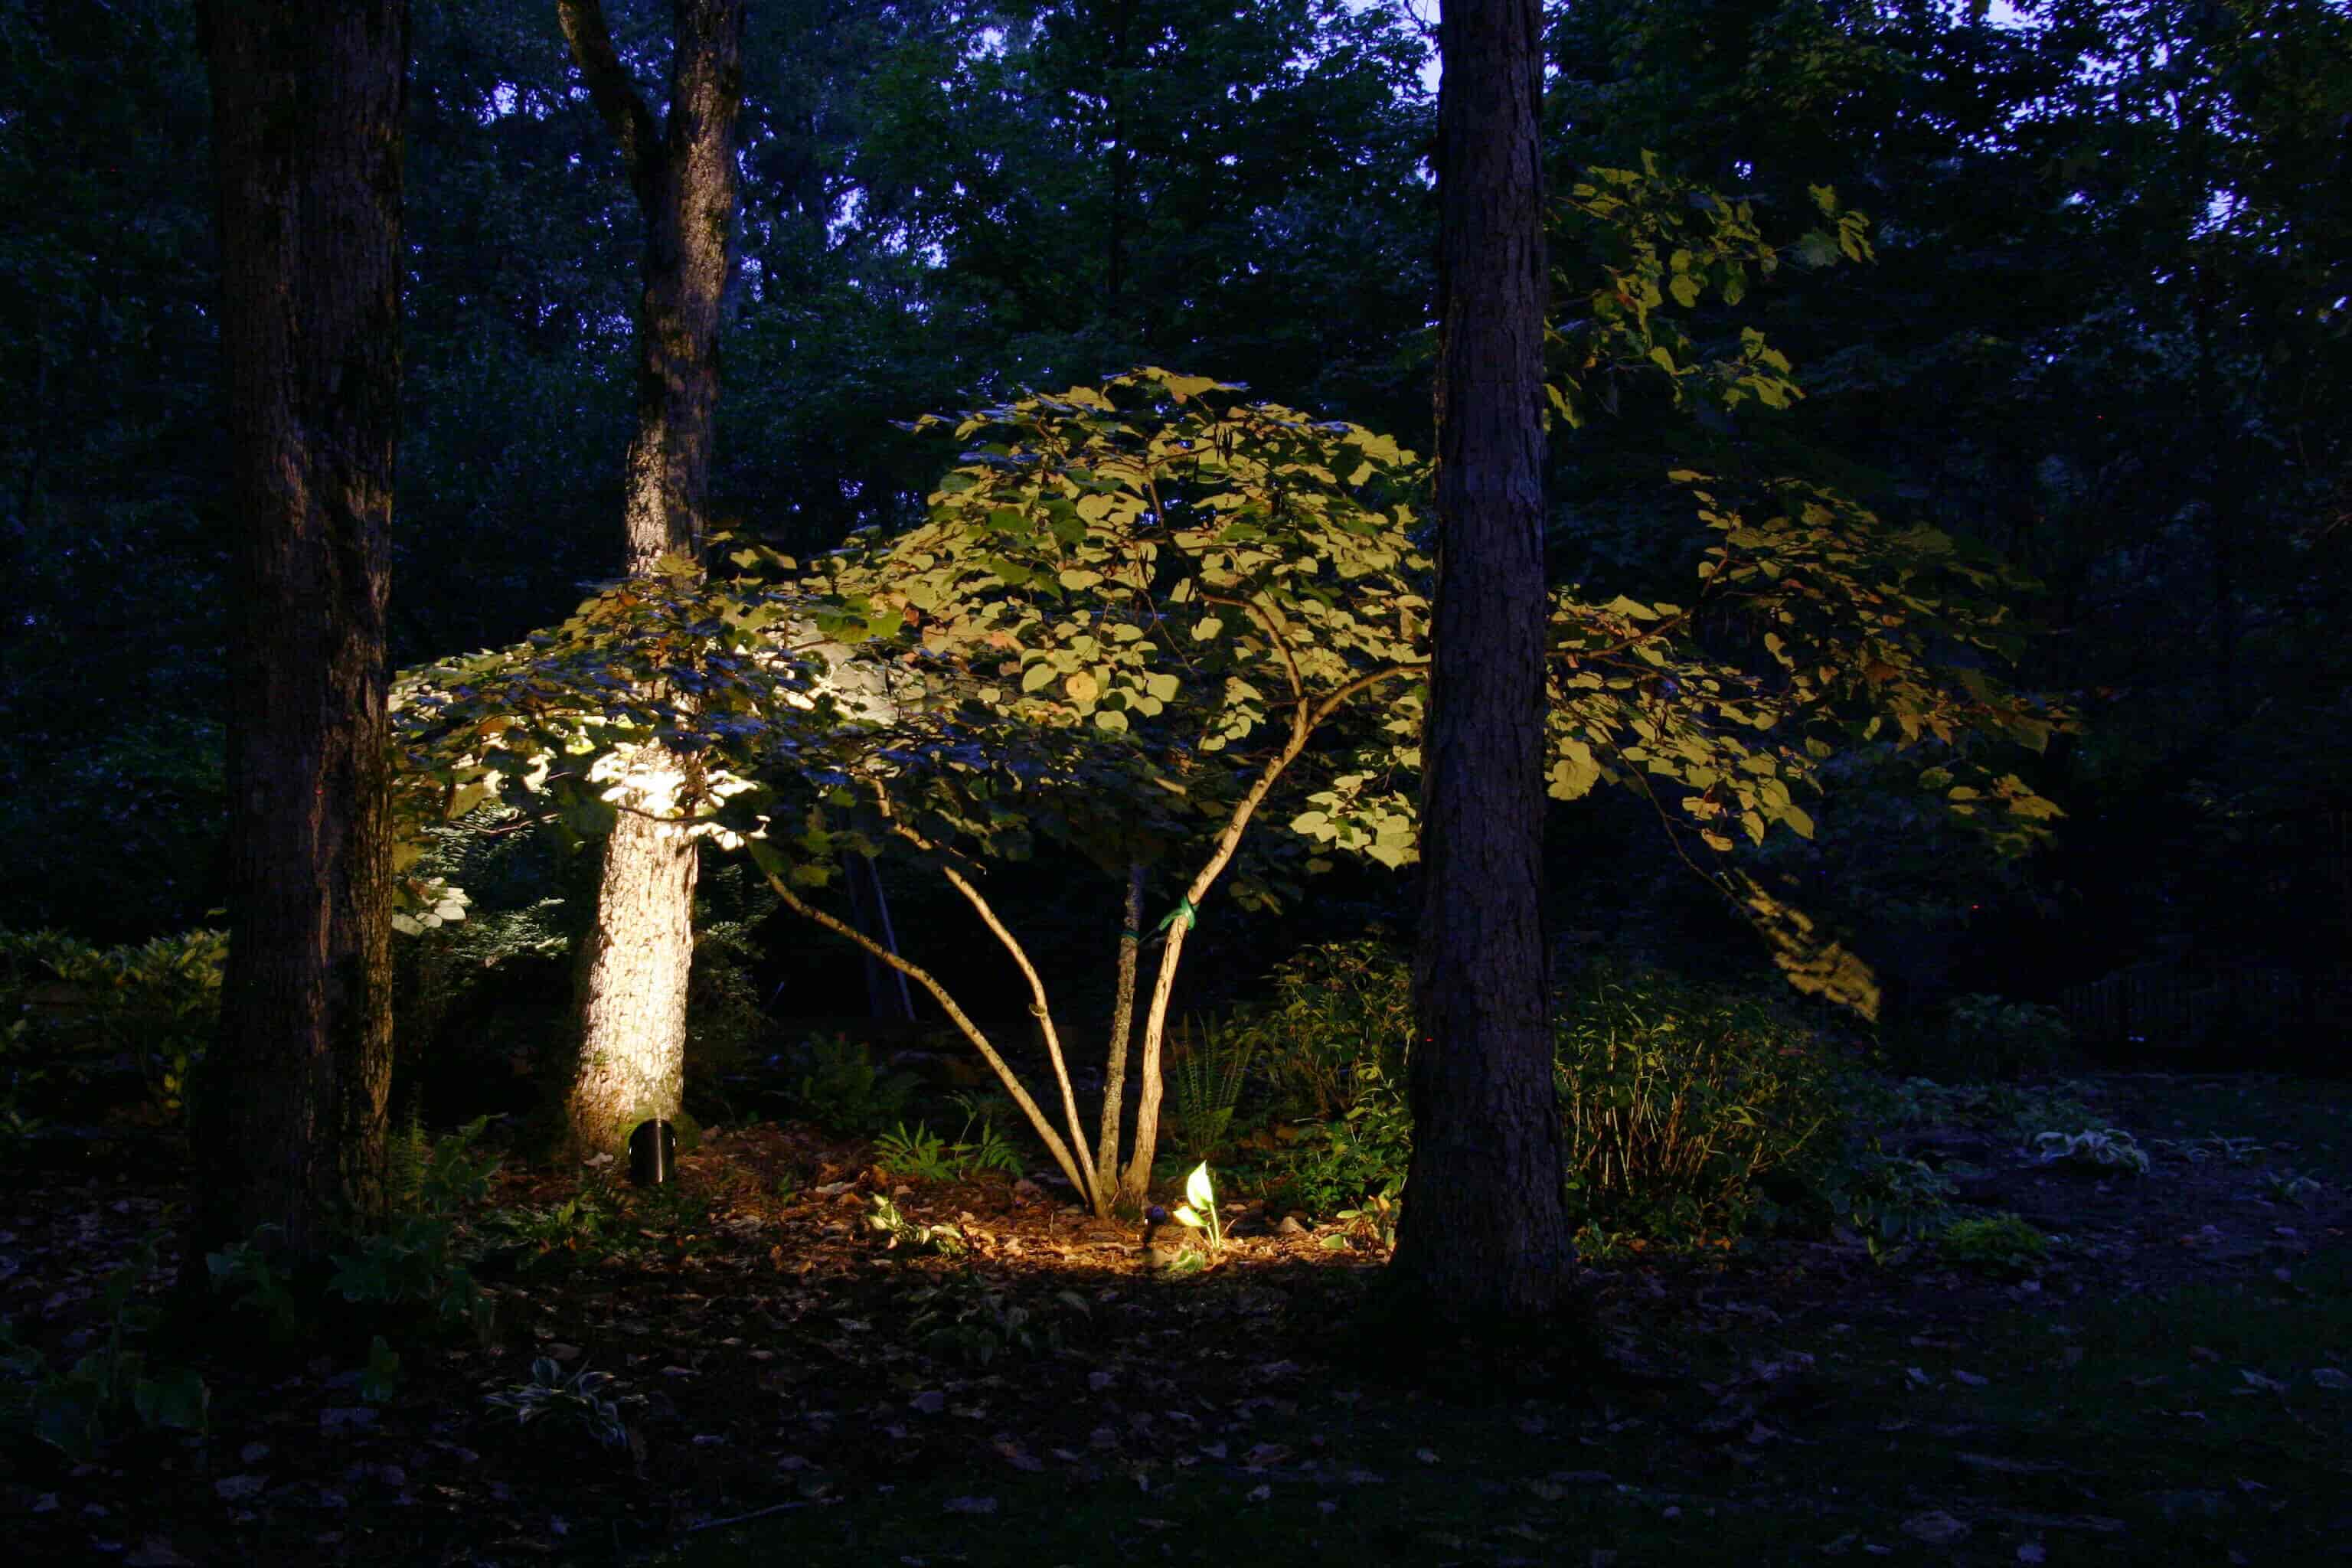 Tree lit up by ground lights